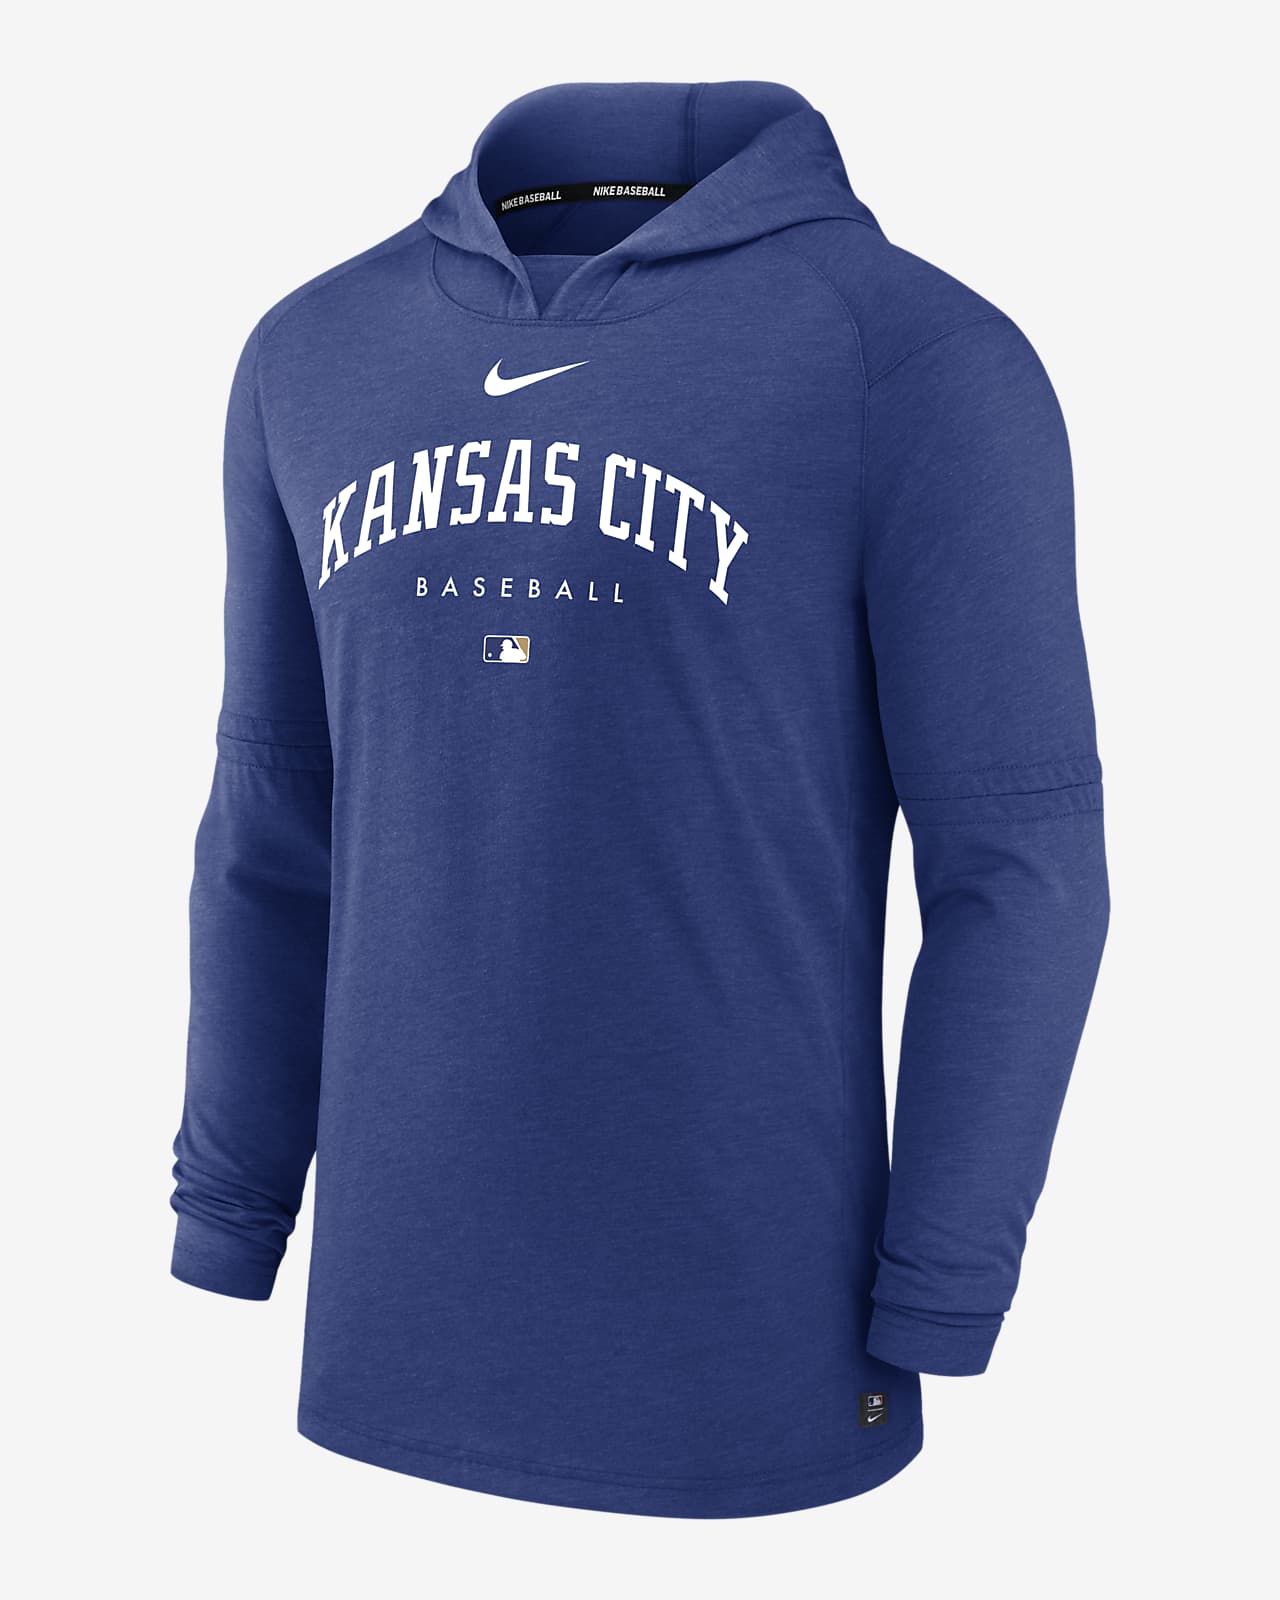 Baseball is Better in Kansas City Royals Shirt, hoodie, sweater